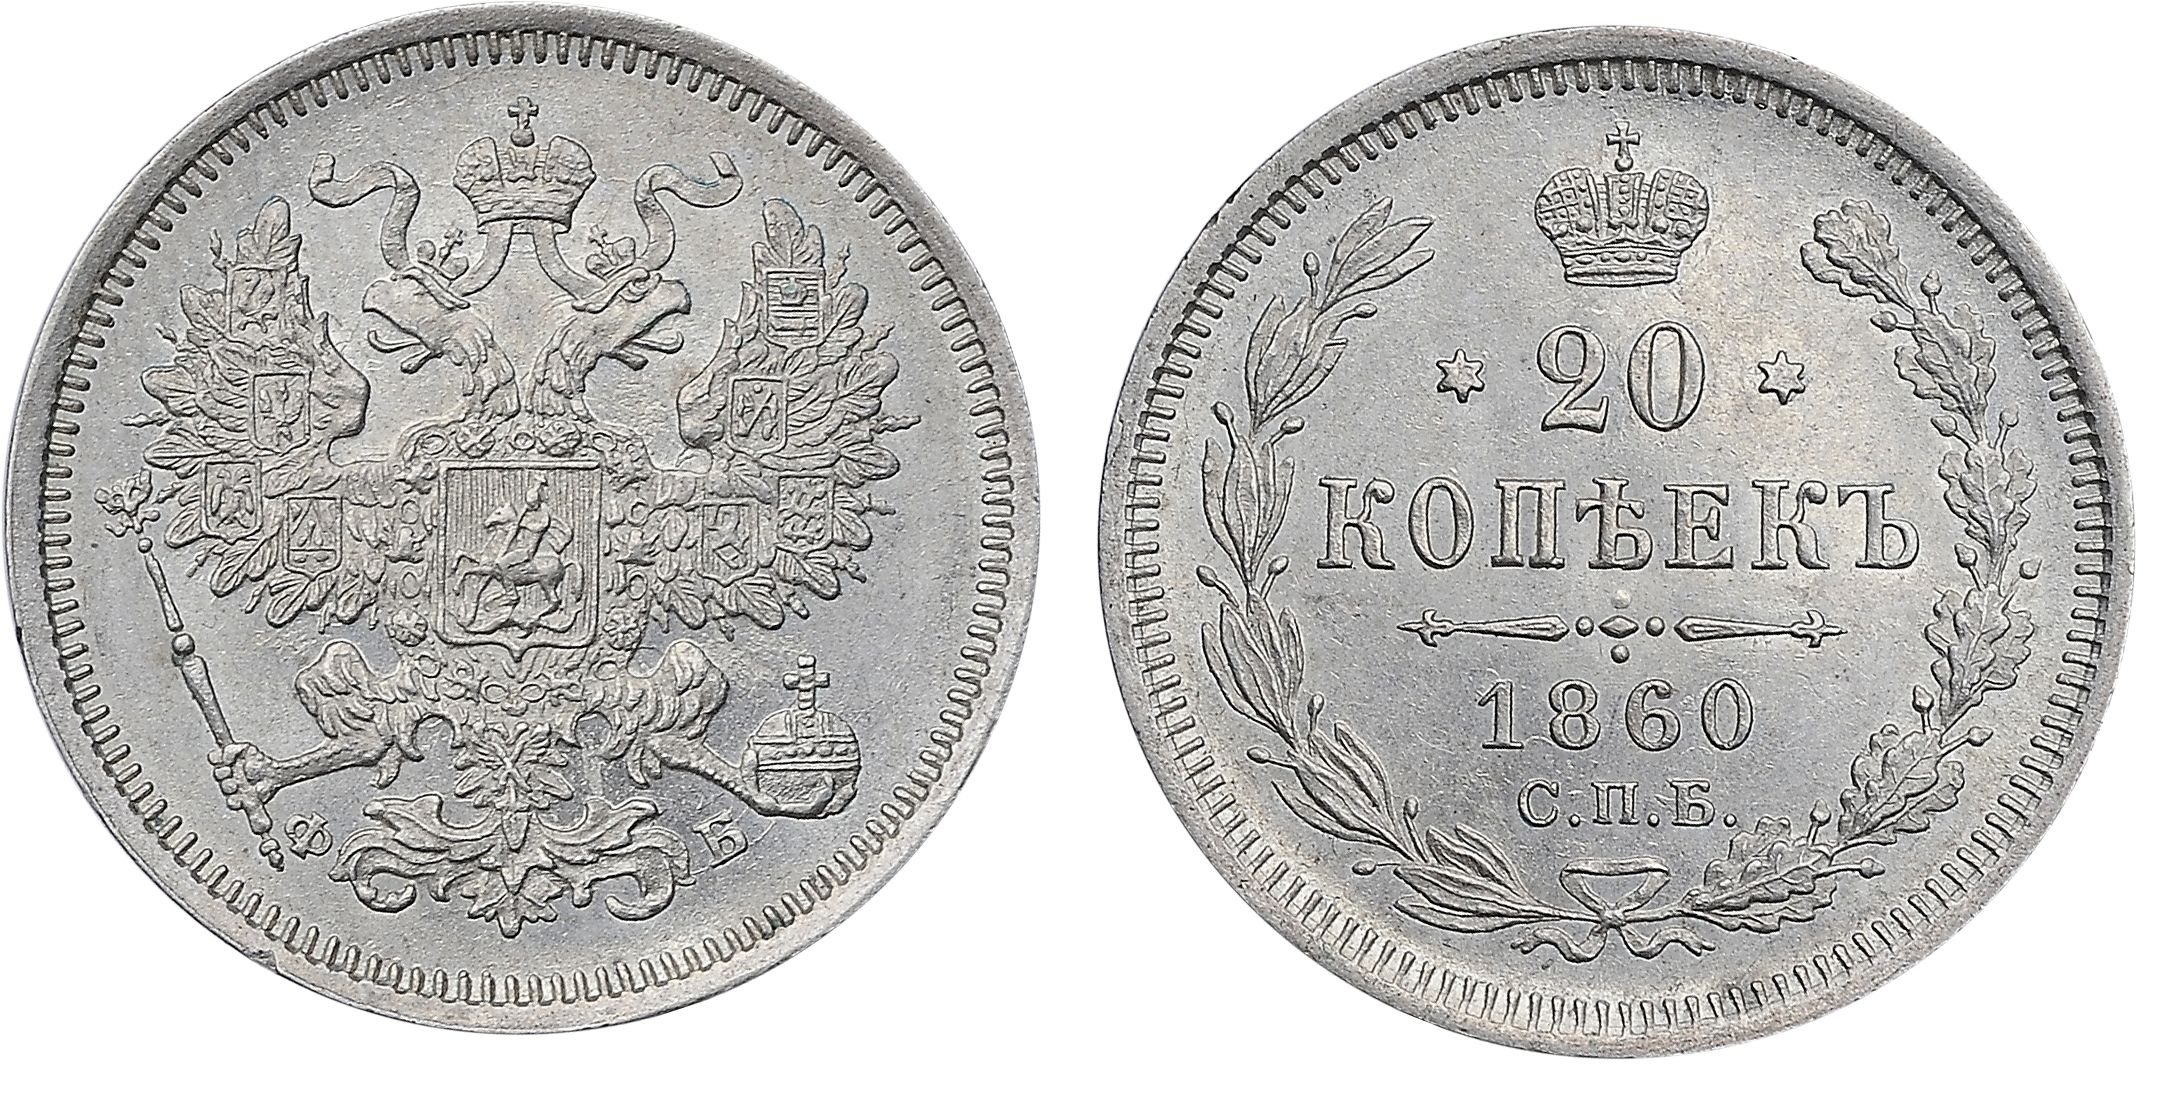 314. 20 Копеек 1860 г. СПб-ФБ. Монета нового образца. 